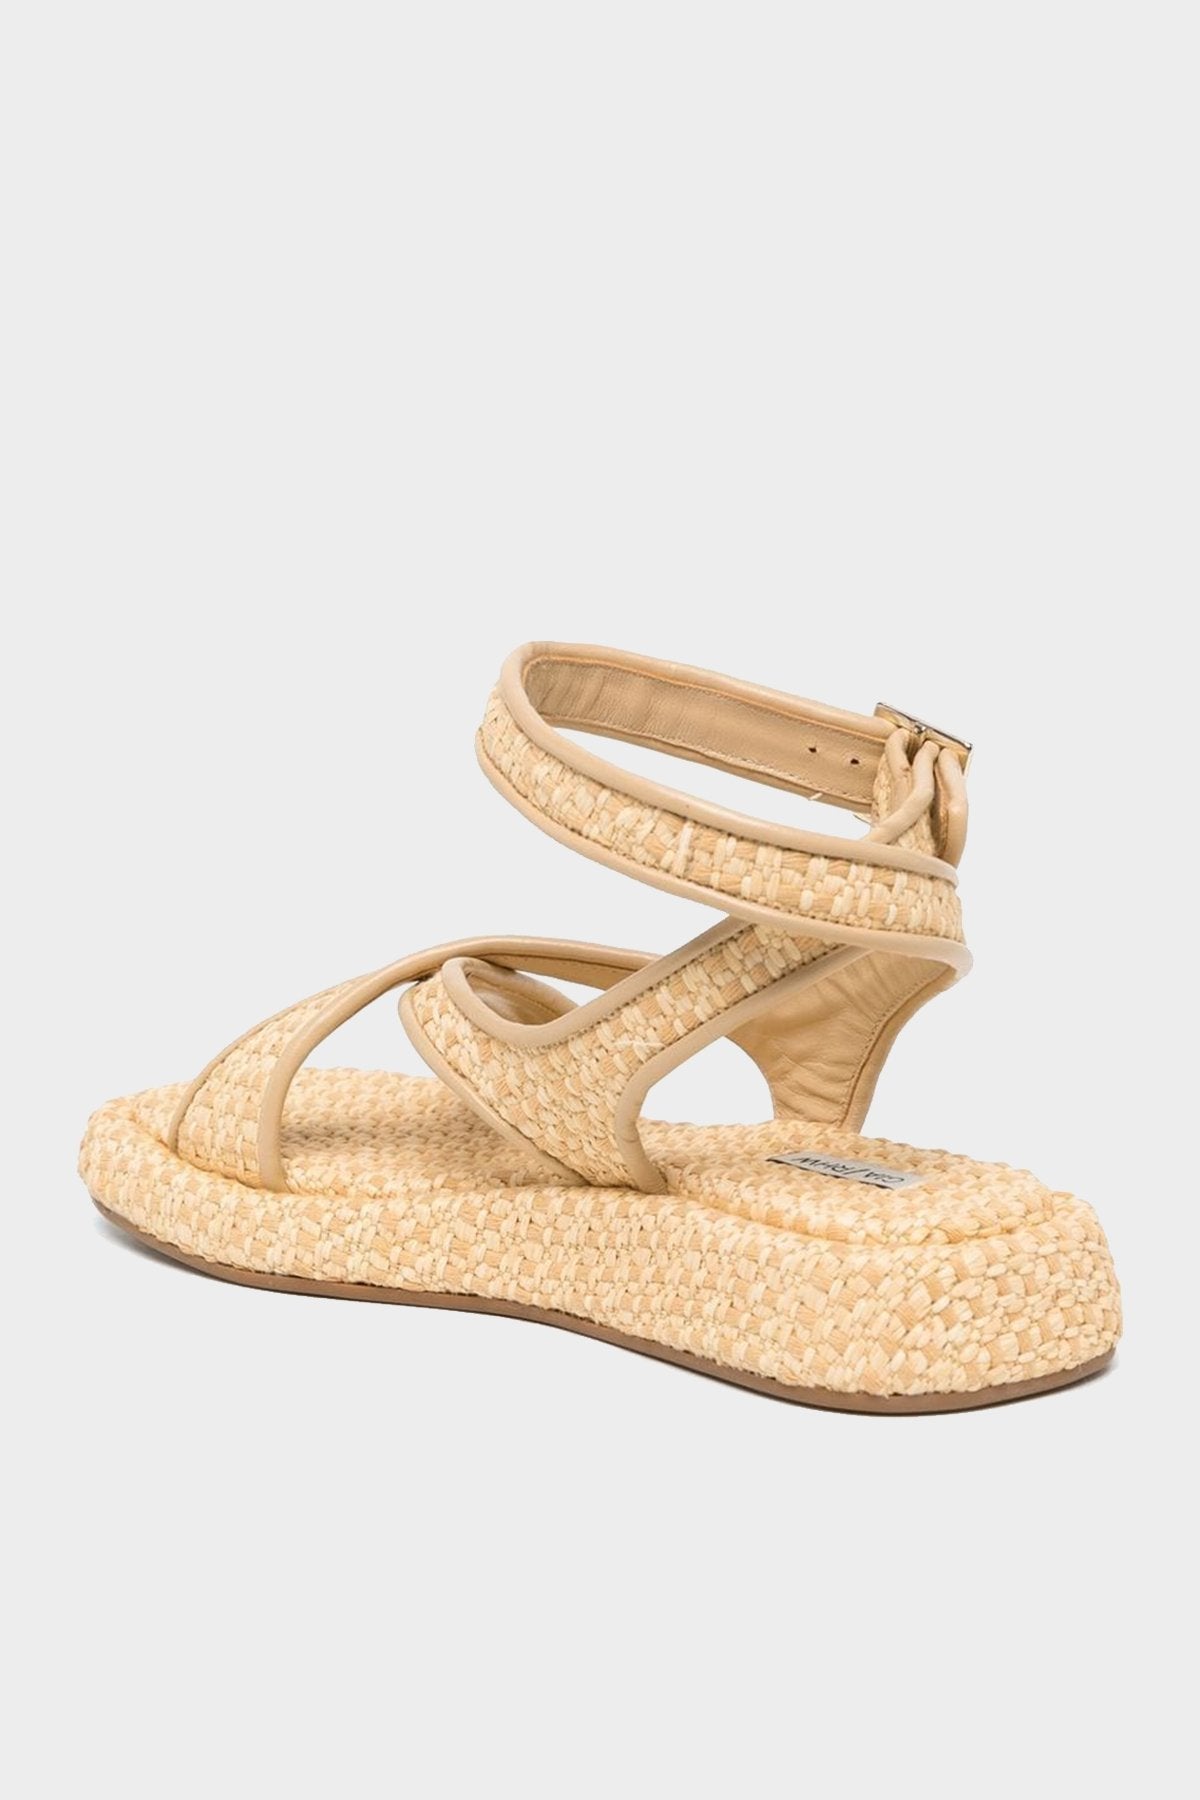 Raffia Ankle Strap Flat Sandals in Natural - shop-olivia.com